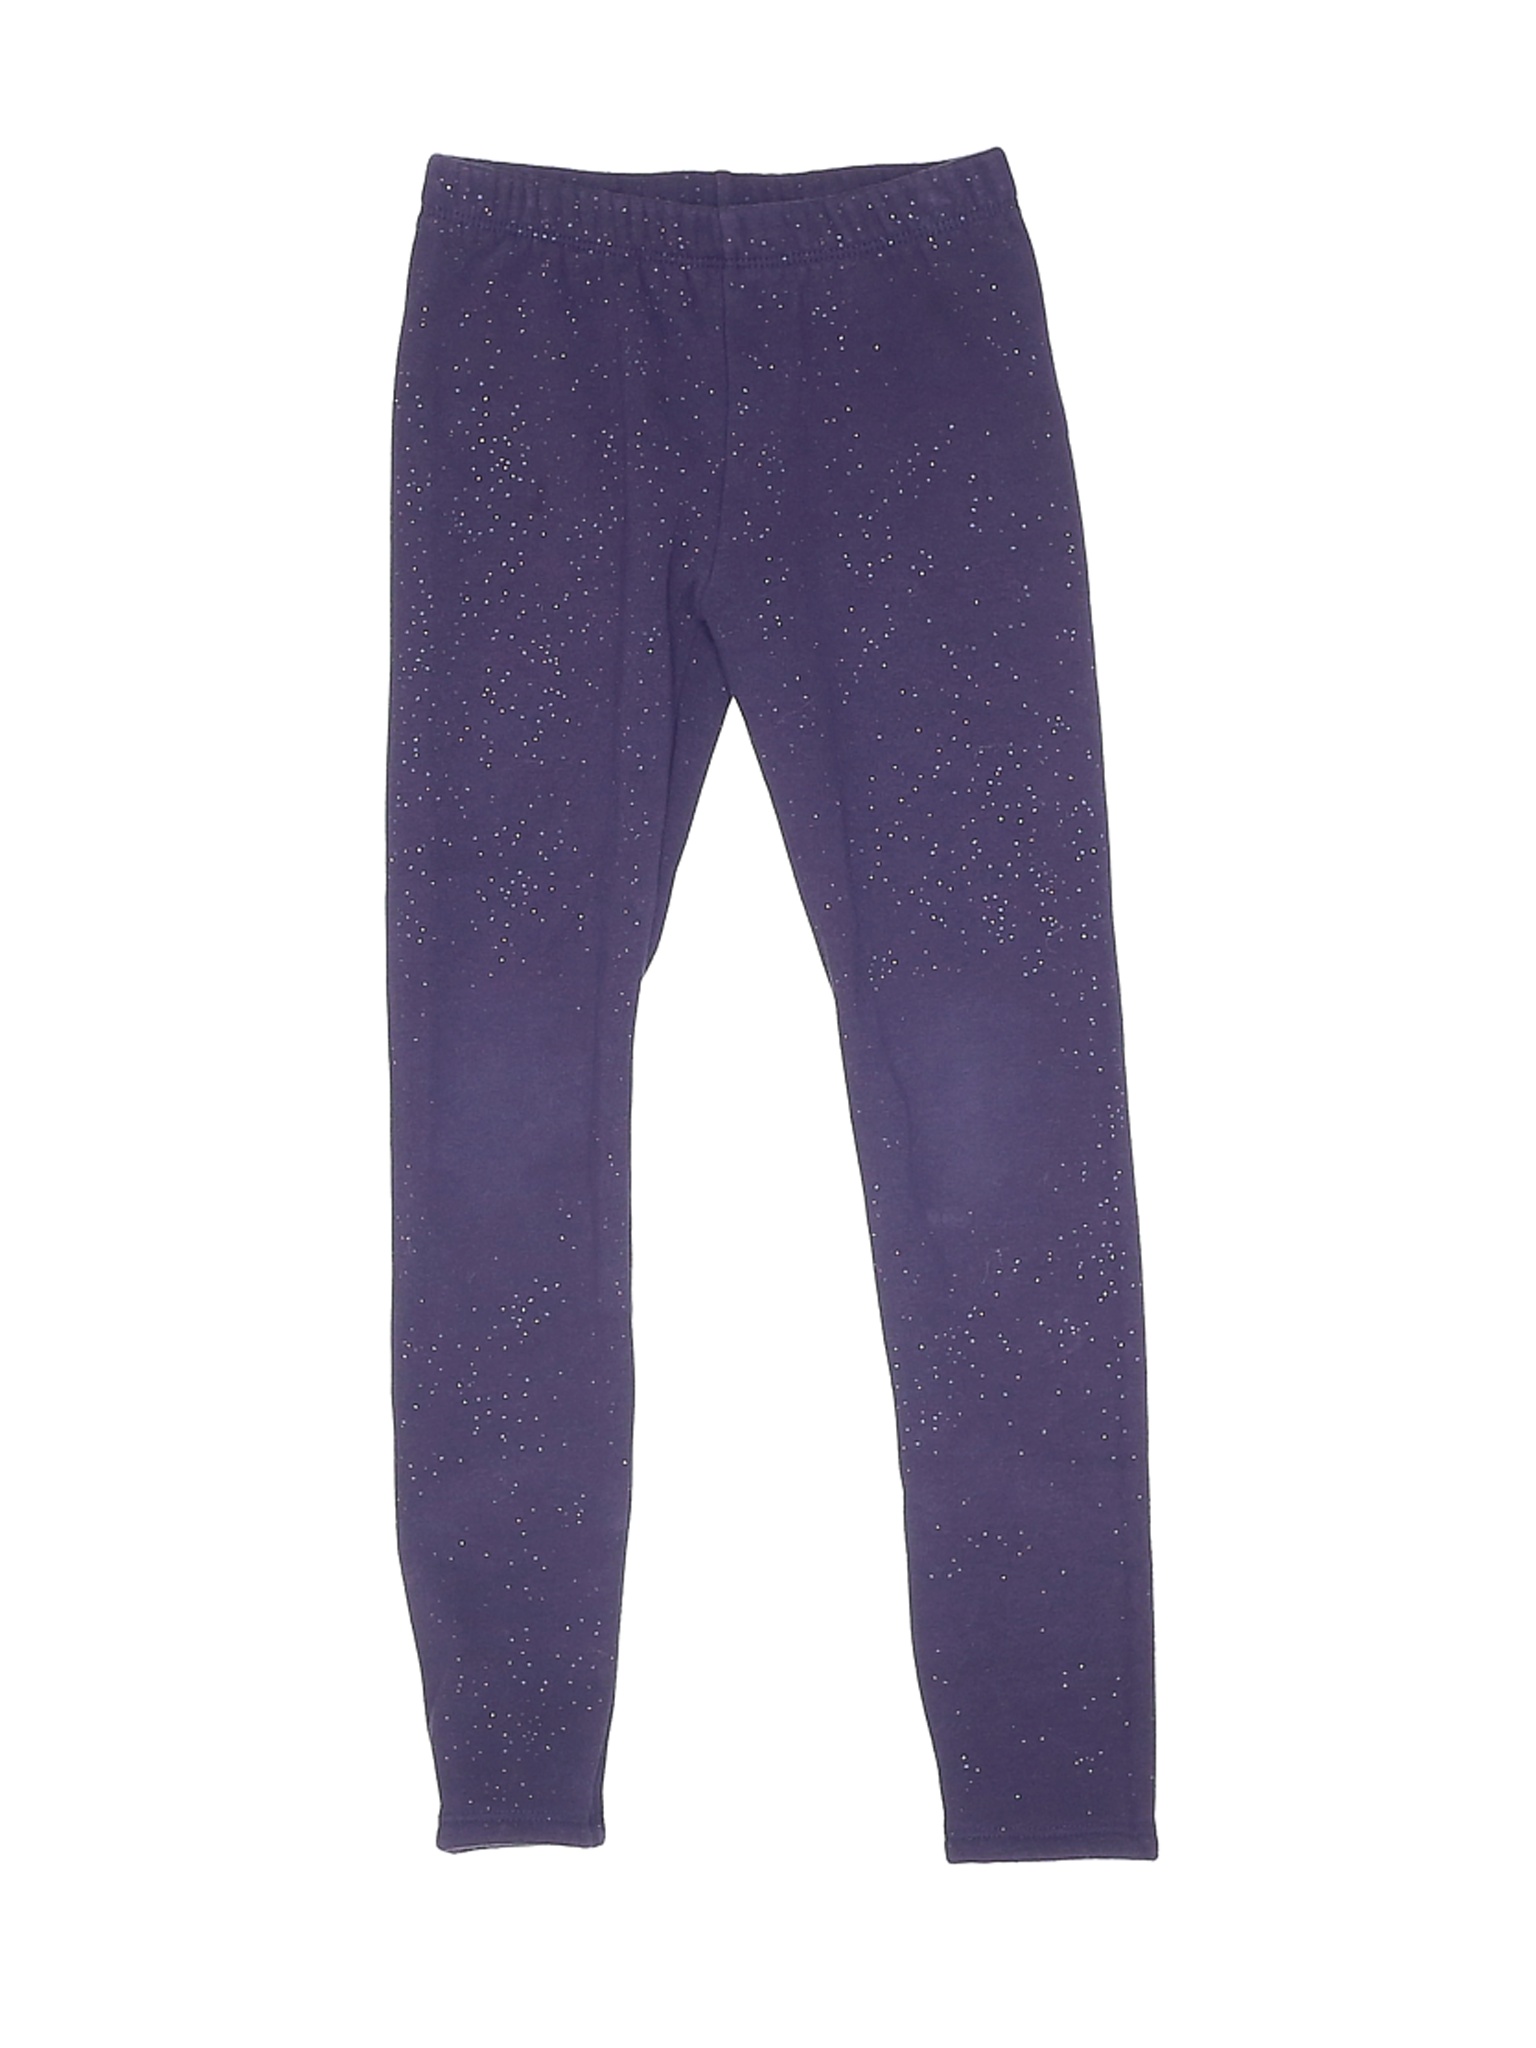 Gymboree Girls Purple Sweatpants 7 | eBay